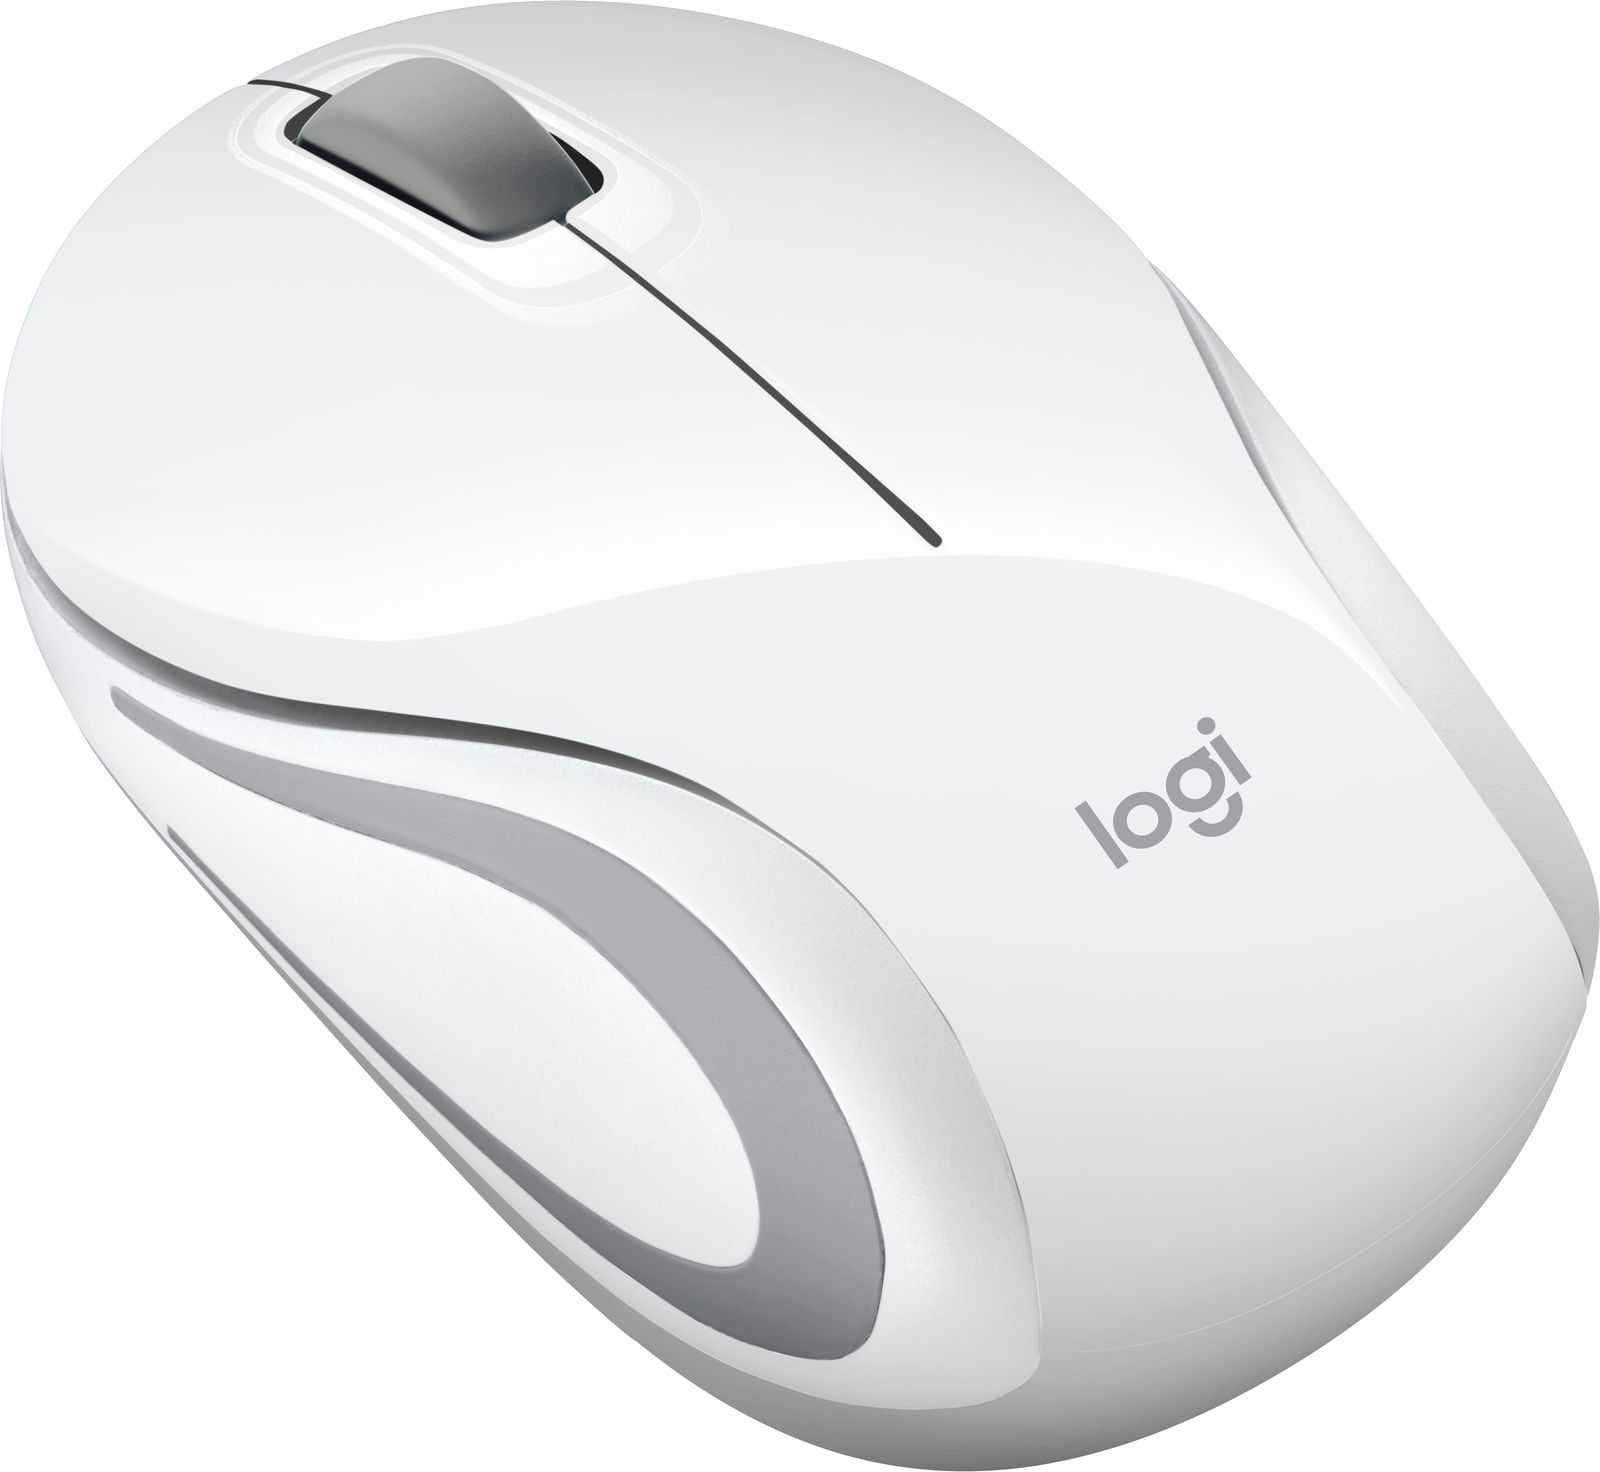 Мышь logitech wireless mini mouse m187 (910-002737) red — купить, цена и характеристики, отзывы